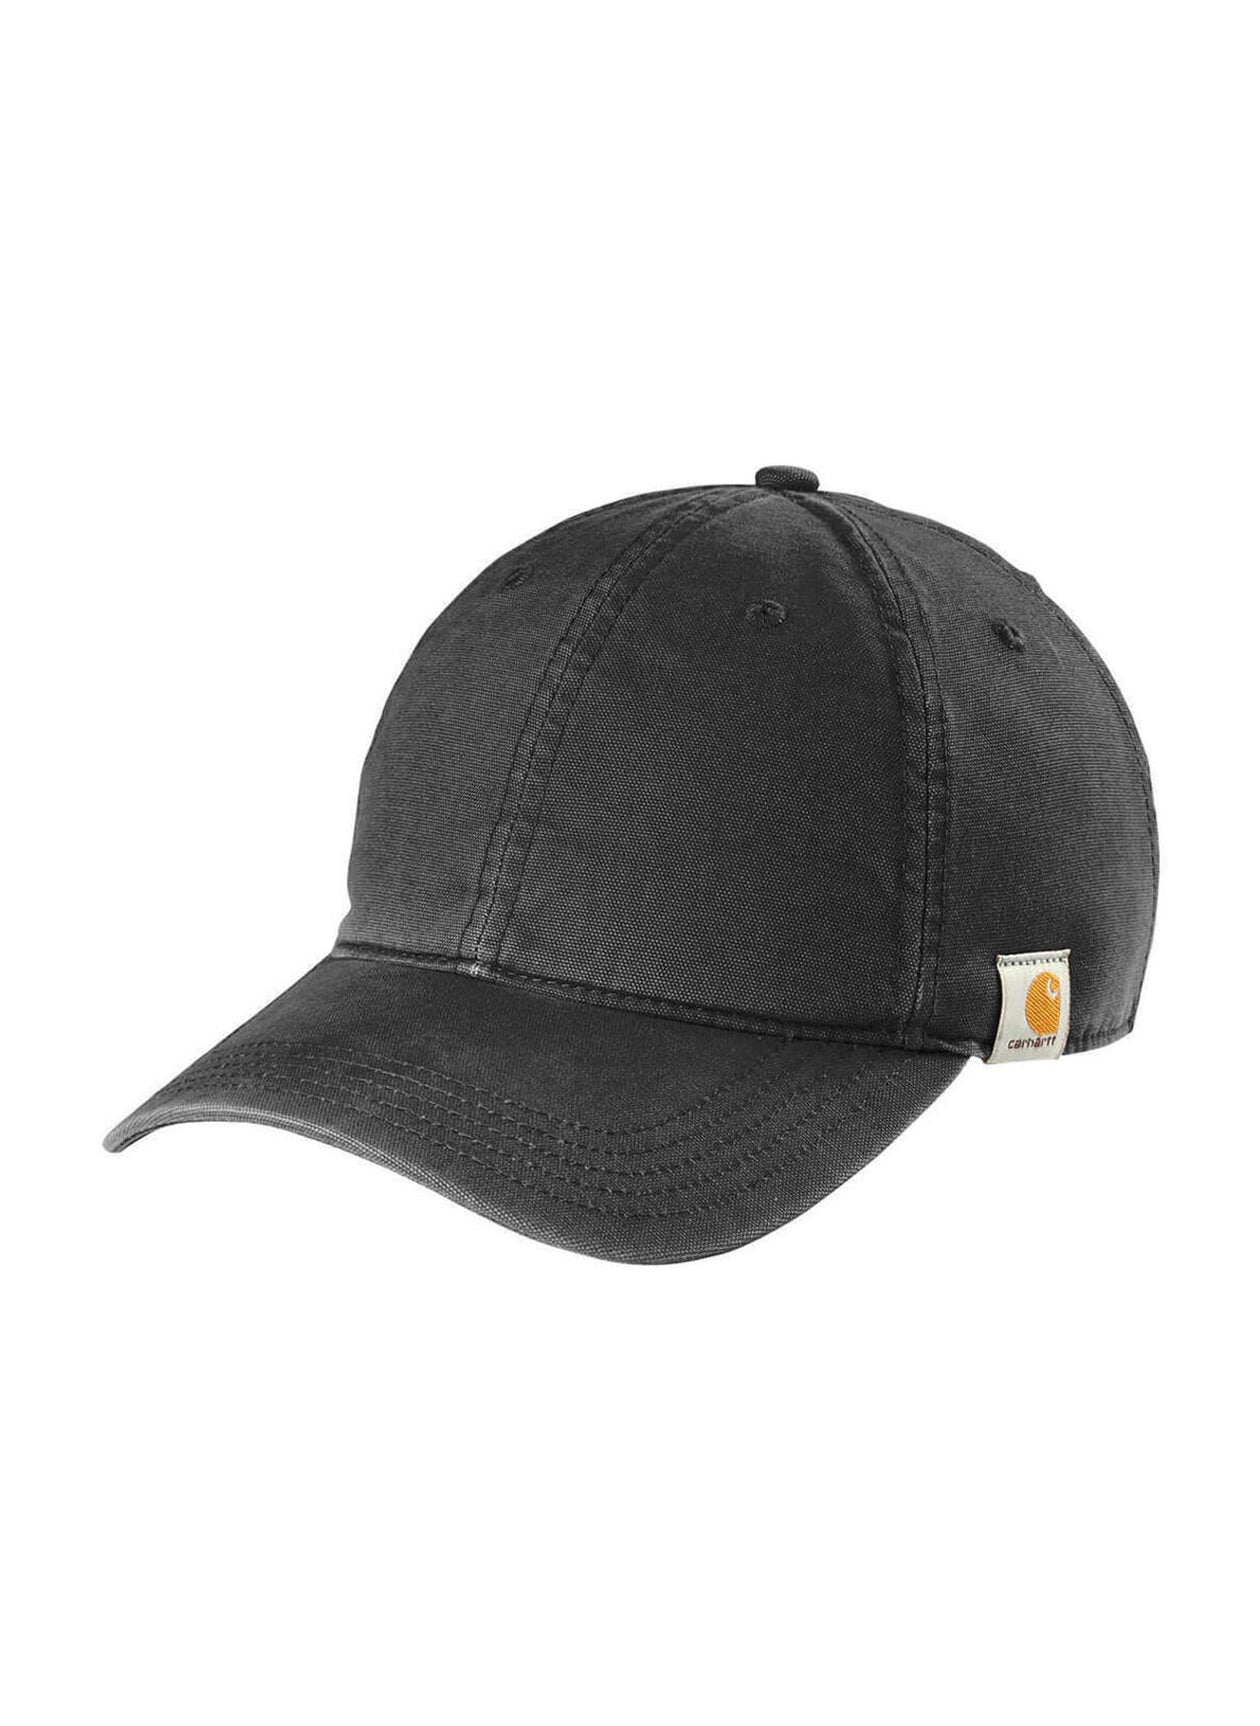 Carhartt Black Cotton Canvas Hat |  Carhartt 黑色棉質帆布帽子